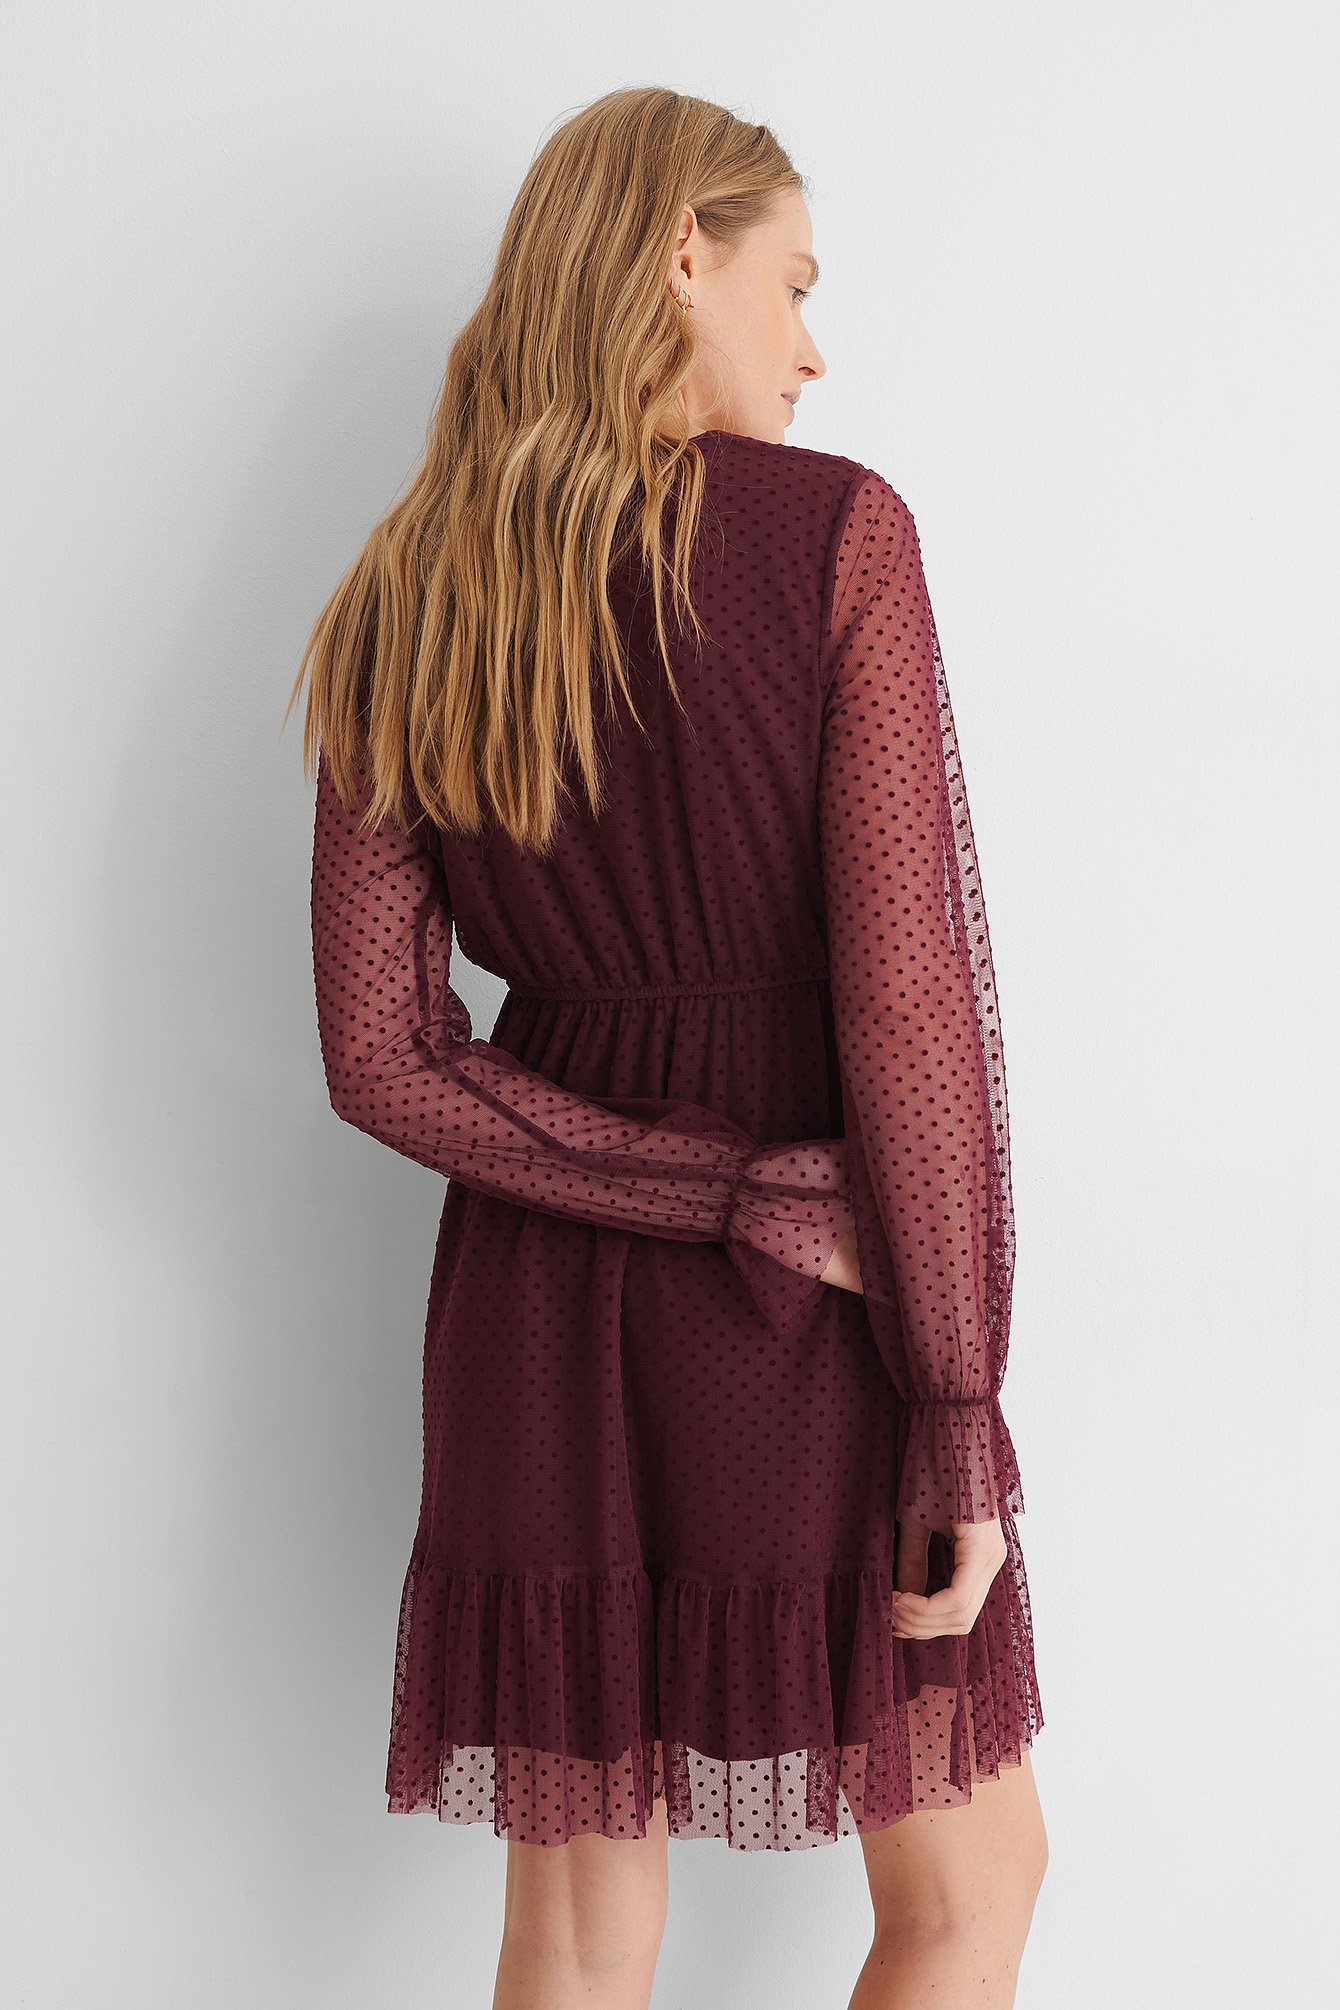 Burgundy Dot Detail Chiffon Dress